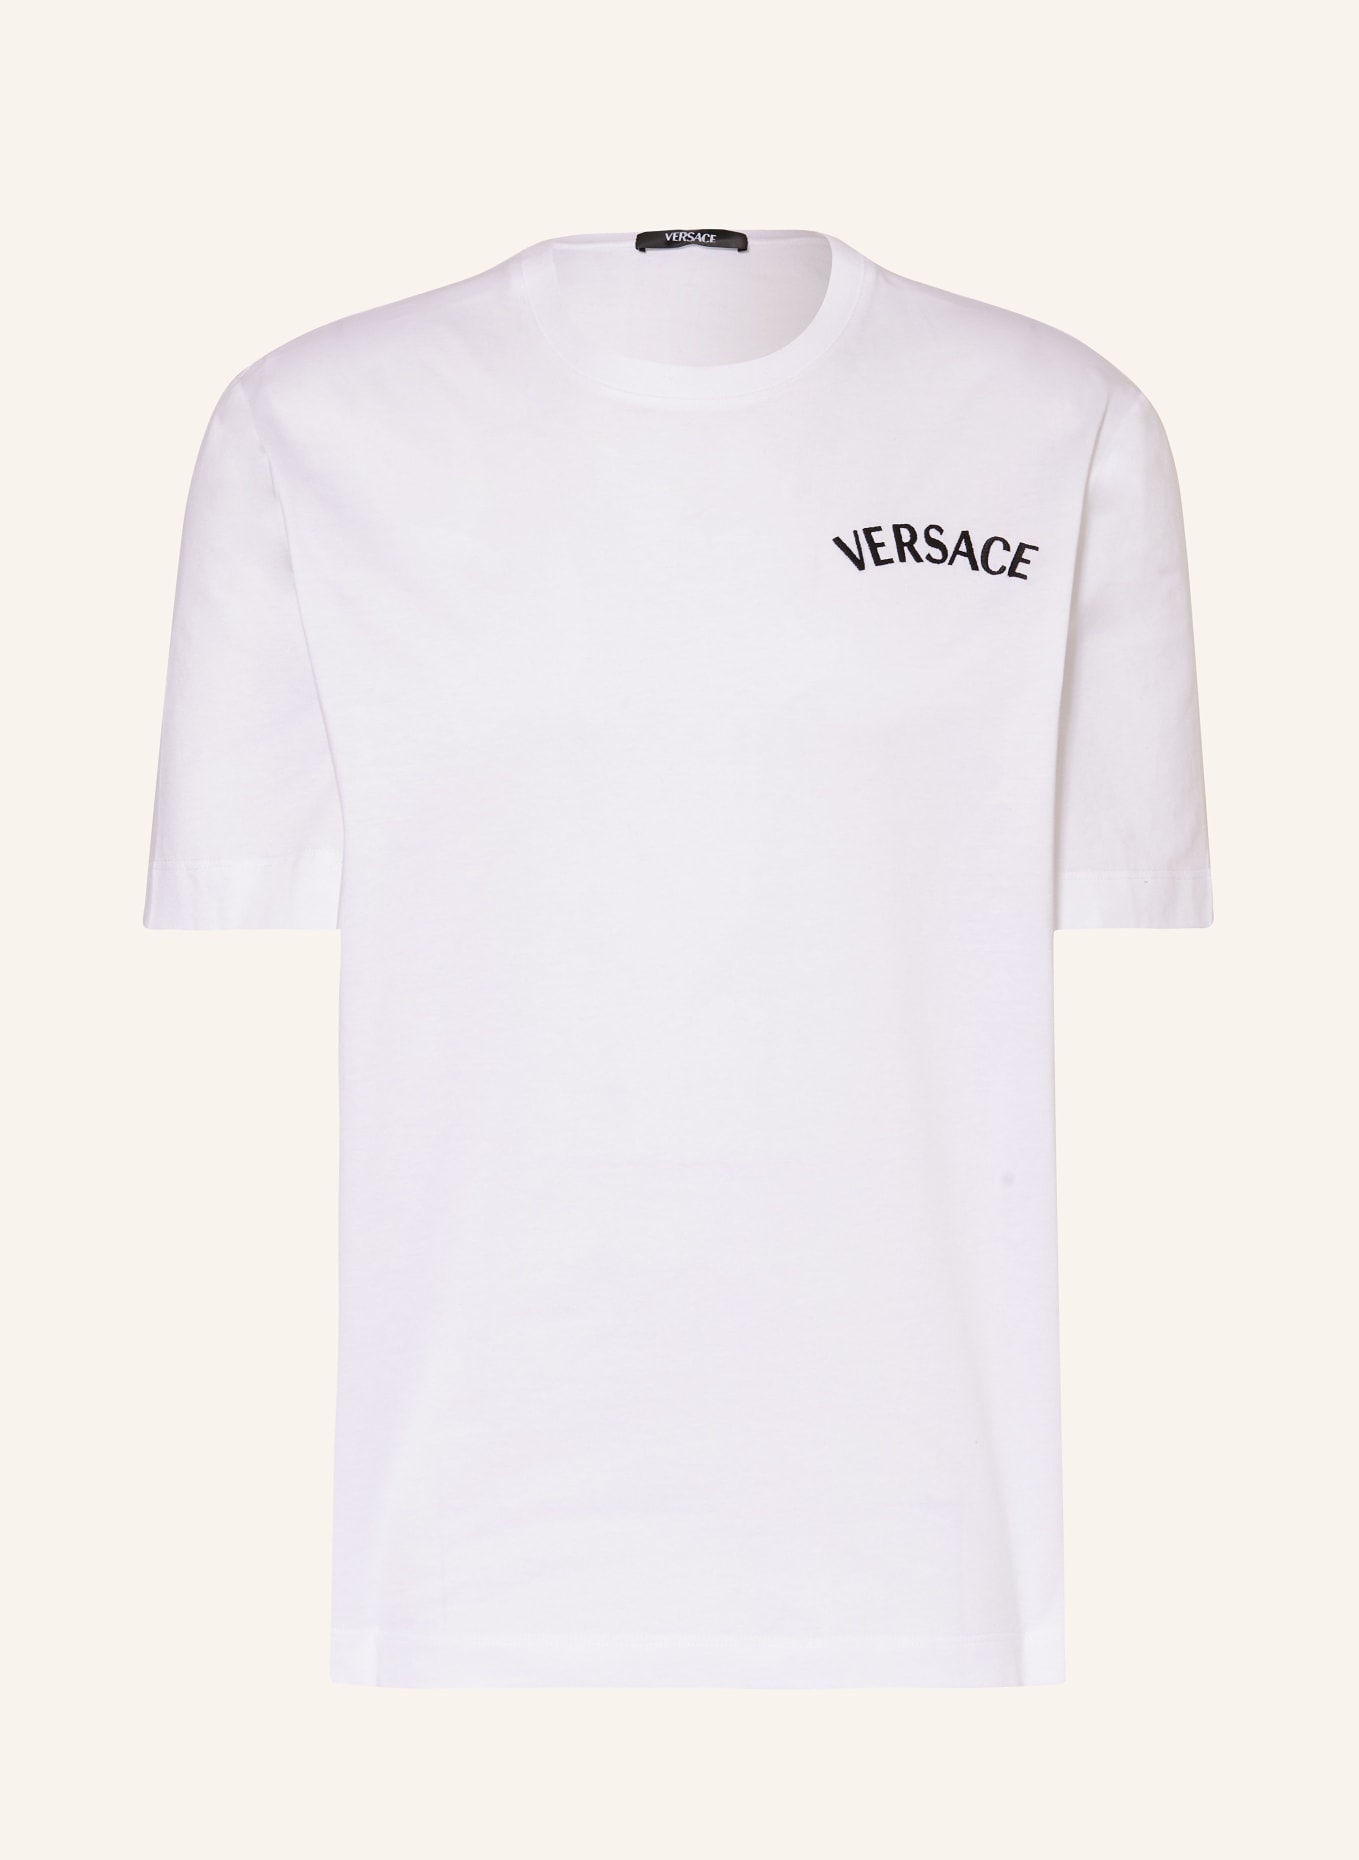 VERSACE T-shirt in white